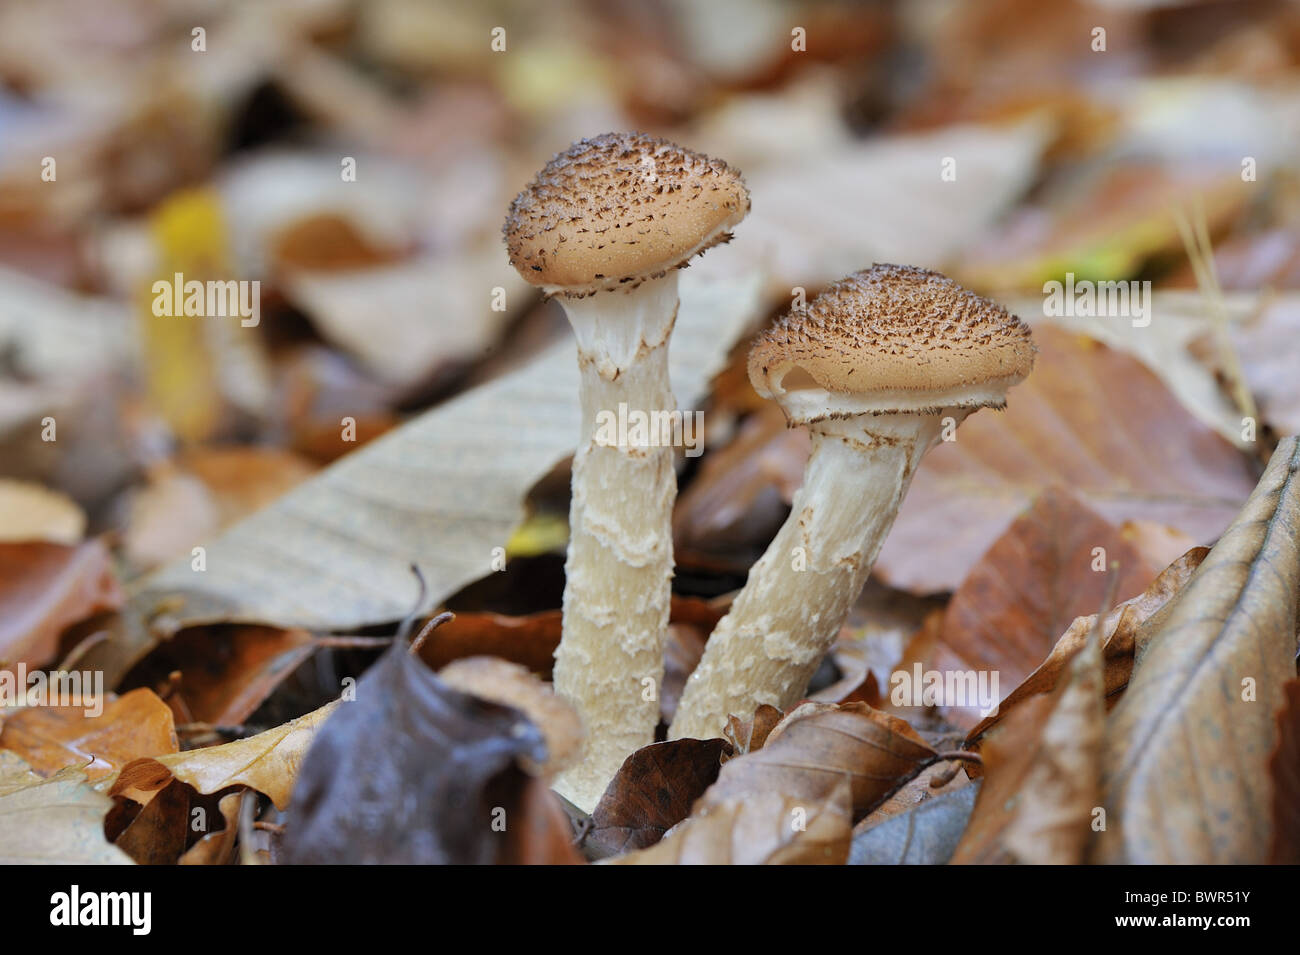 Honey mushroom - Honey fungus (Armillaria mellea) - Pathogenic and parasitic on the wood of hardwoods - Belgium Stock Photo